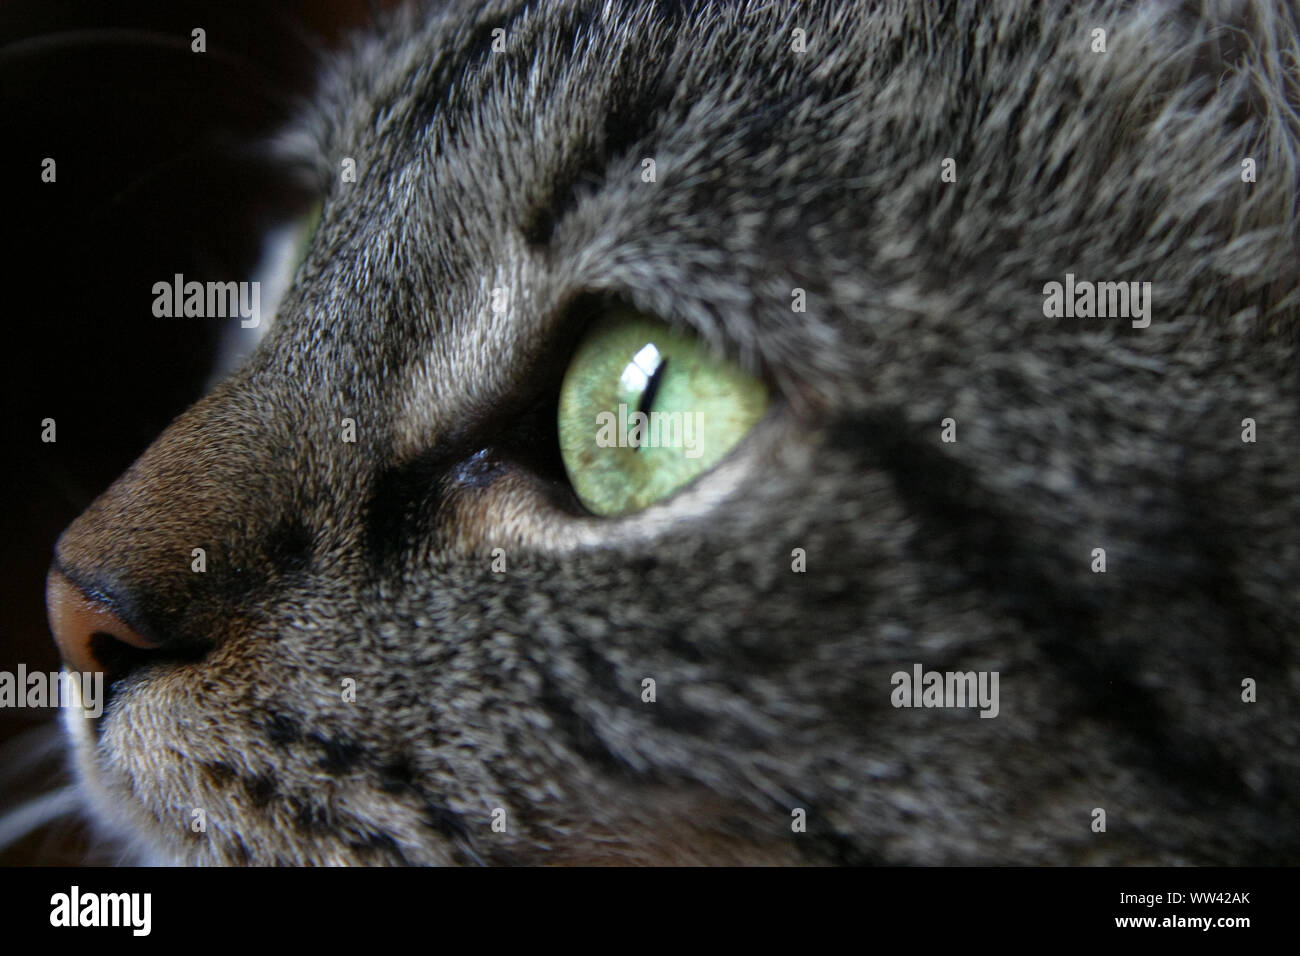 A closeup of a striped cat's green eye. Stock Photo